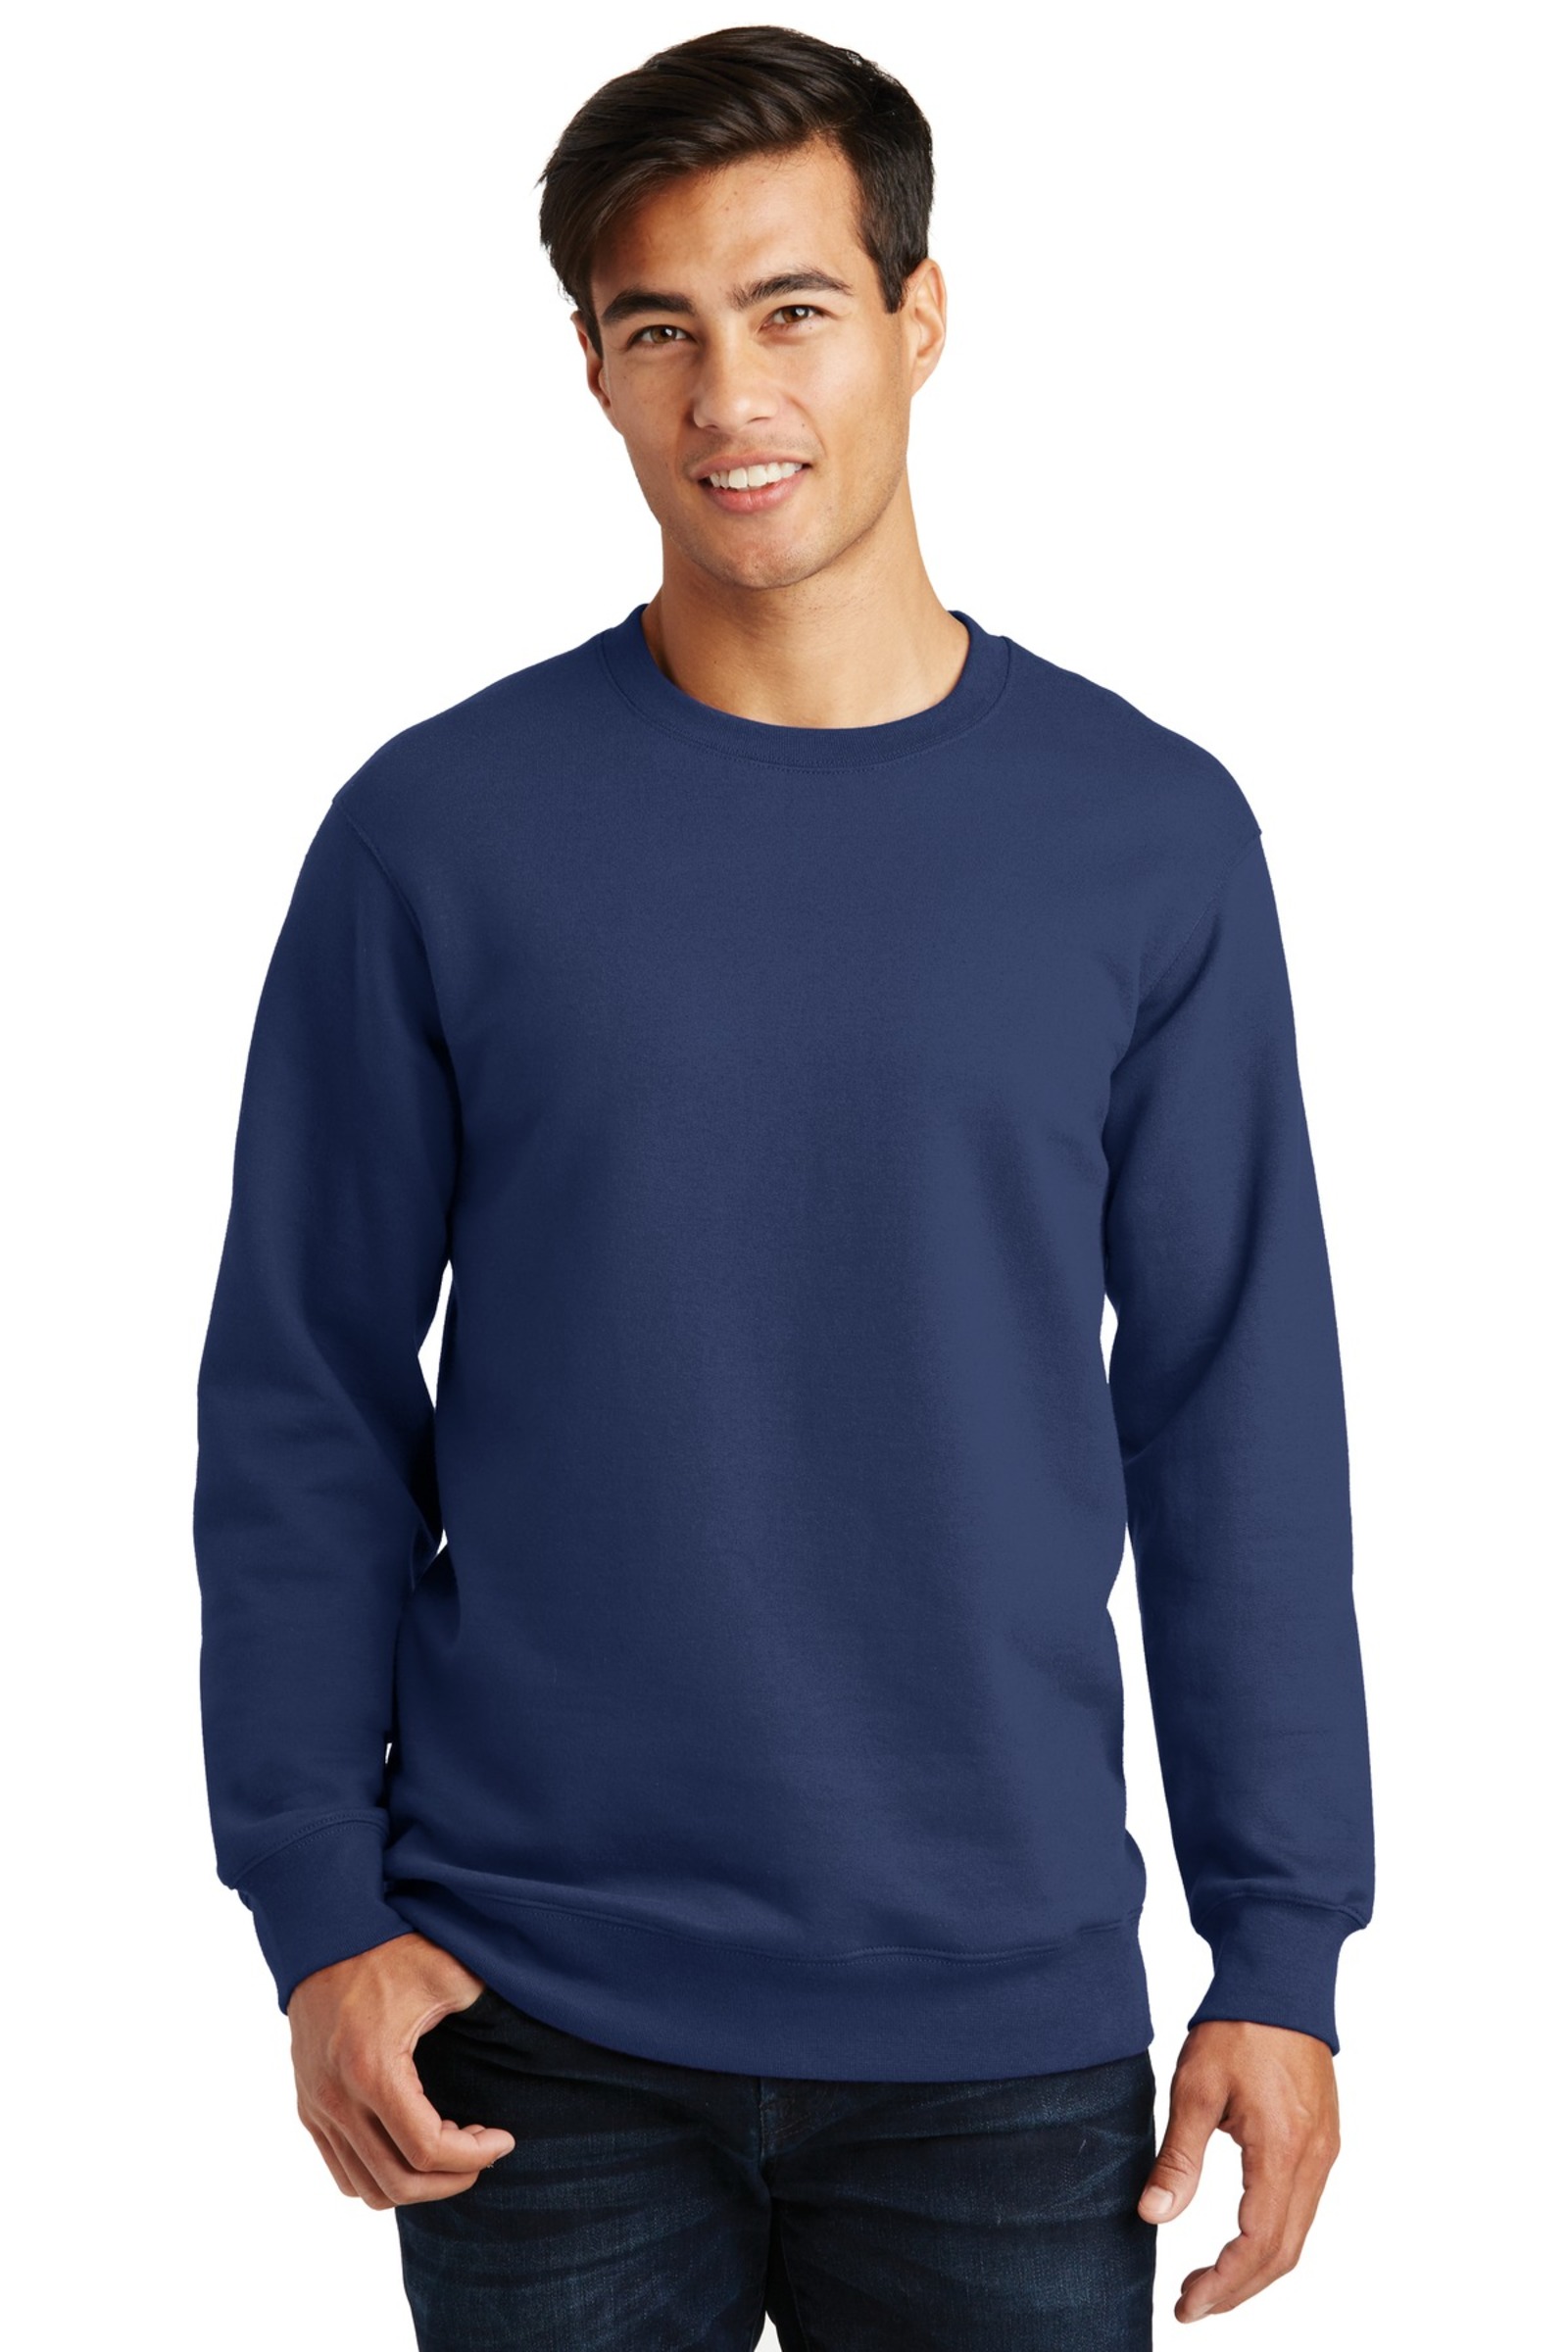 Port & Company Embroidered Men's Fan Favorite Fleece Crewneck Sweatshirt